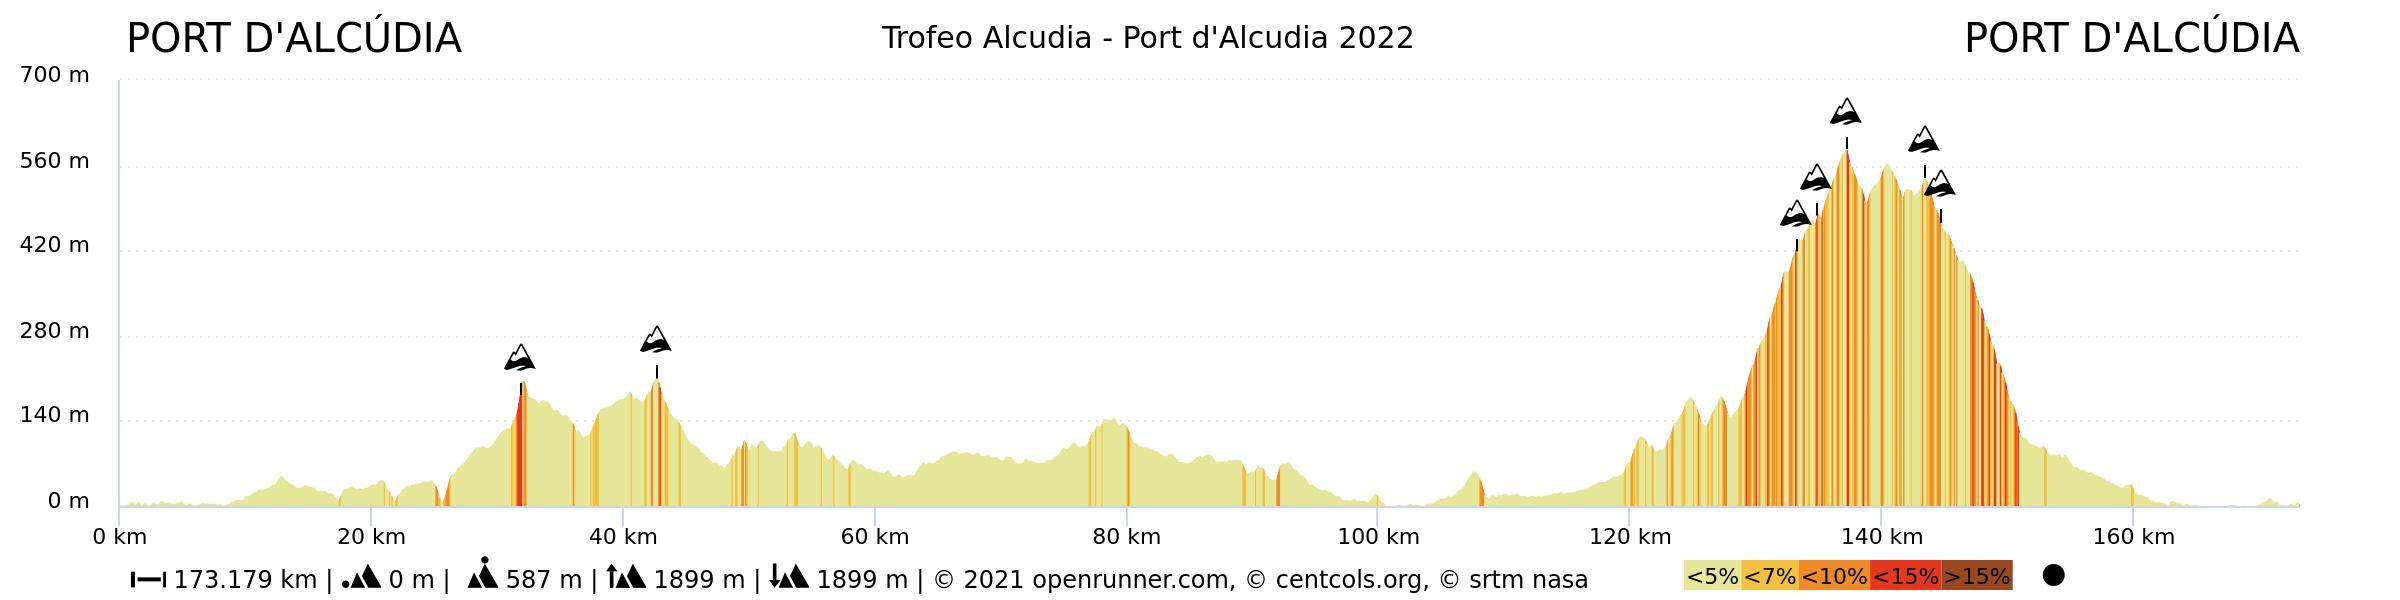 Perfil Trofeo Alcudia